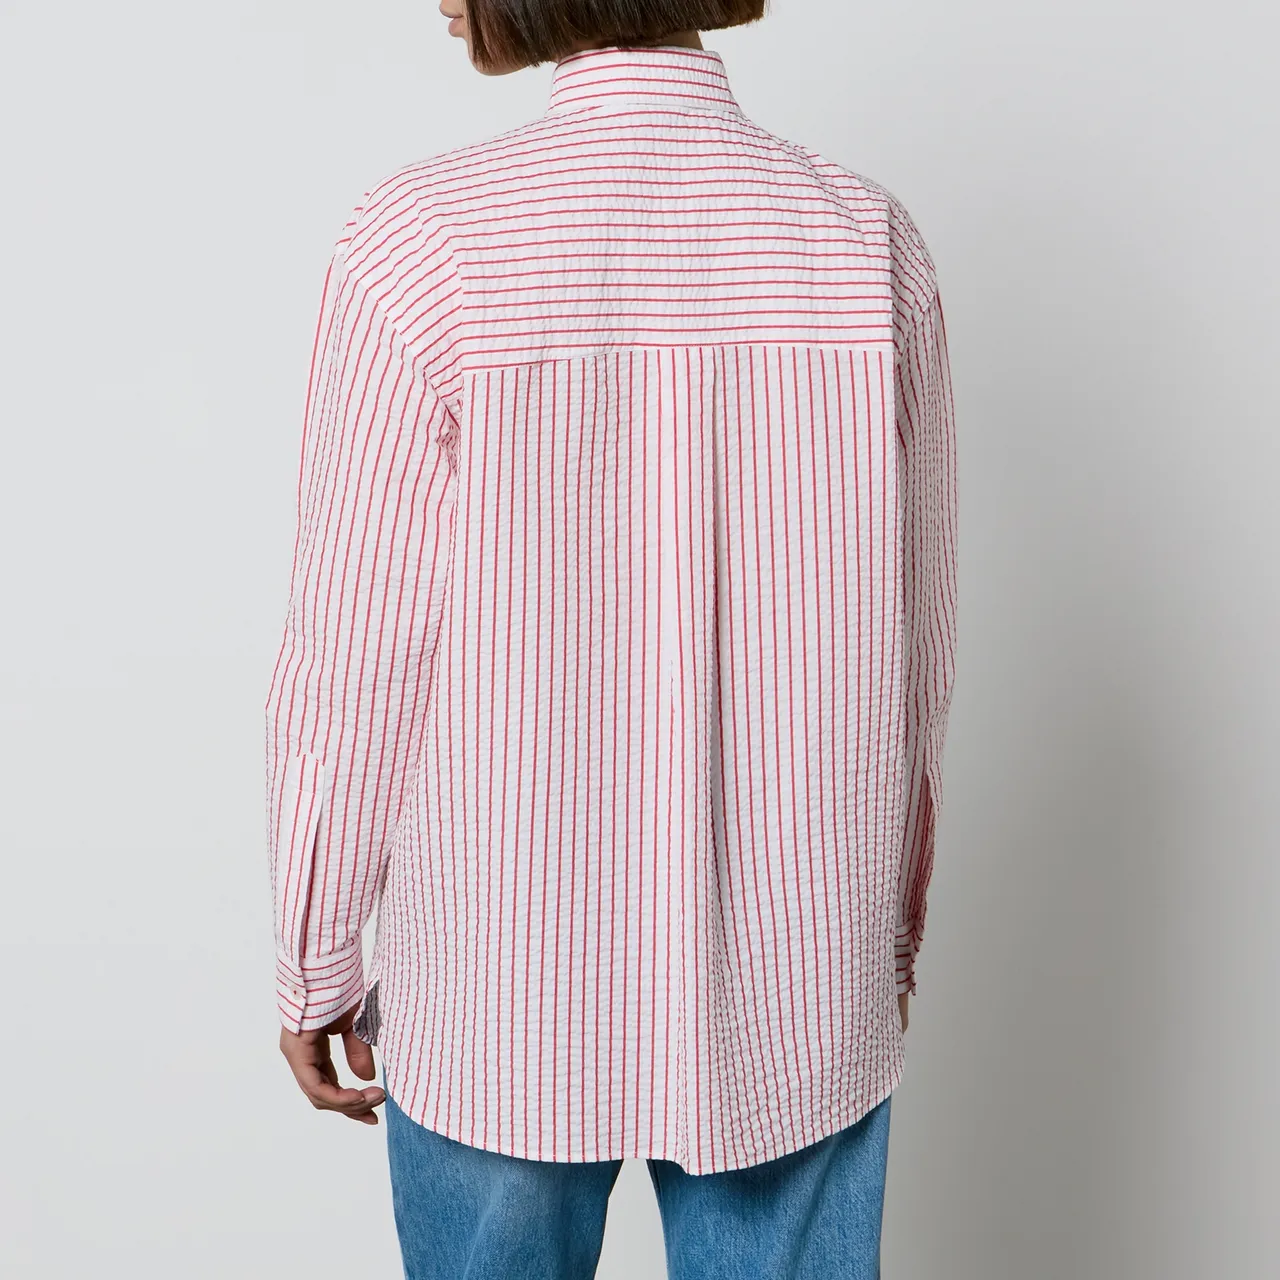 Pinko Bridport 1 Rigato Striped Seersucker Shirt